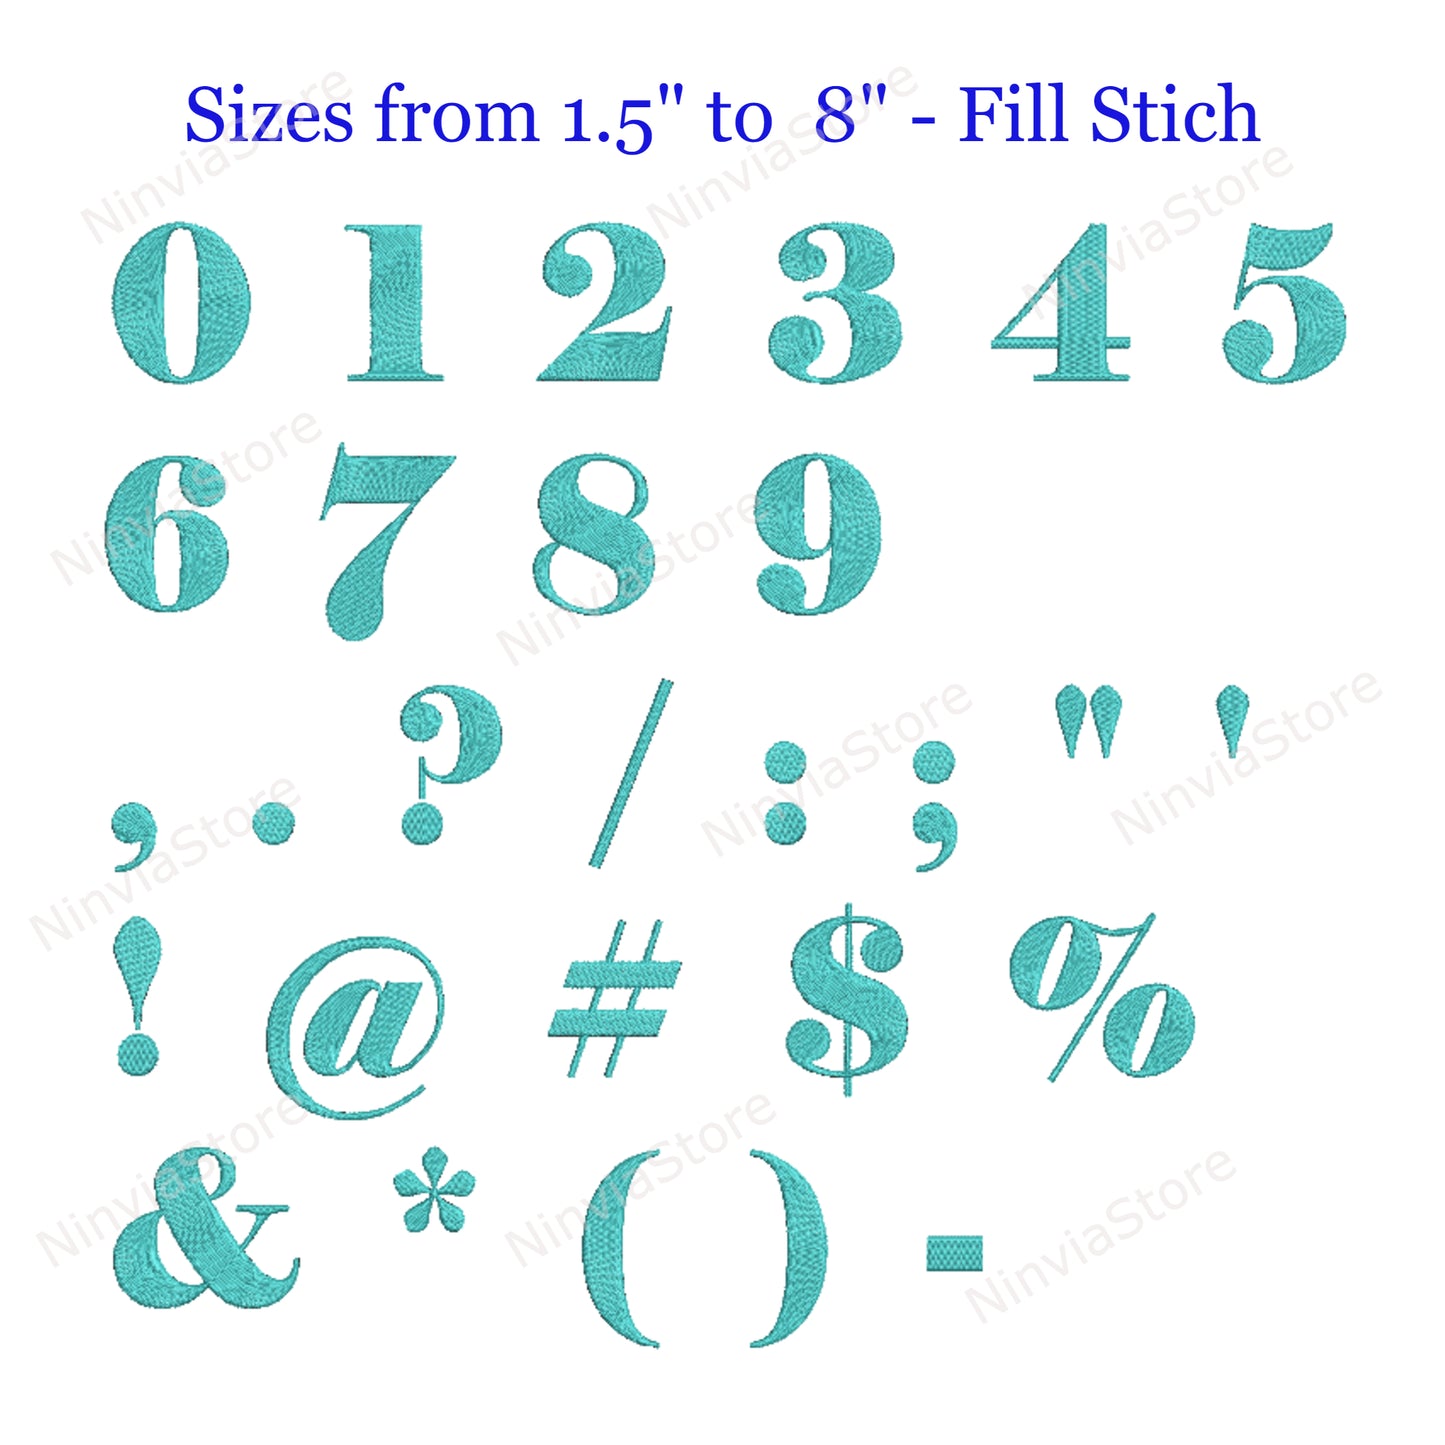 Maschinenstickschrift Elefant, 15 Größen, 8 Formate, BX-Schriftart, PE-Schriftart, Monogramm-Alphabet-Stickmotive